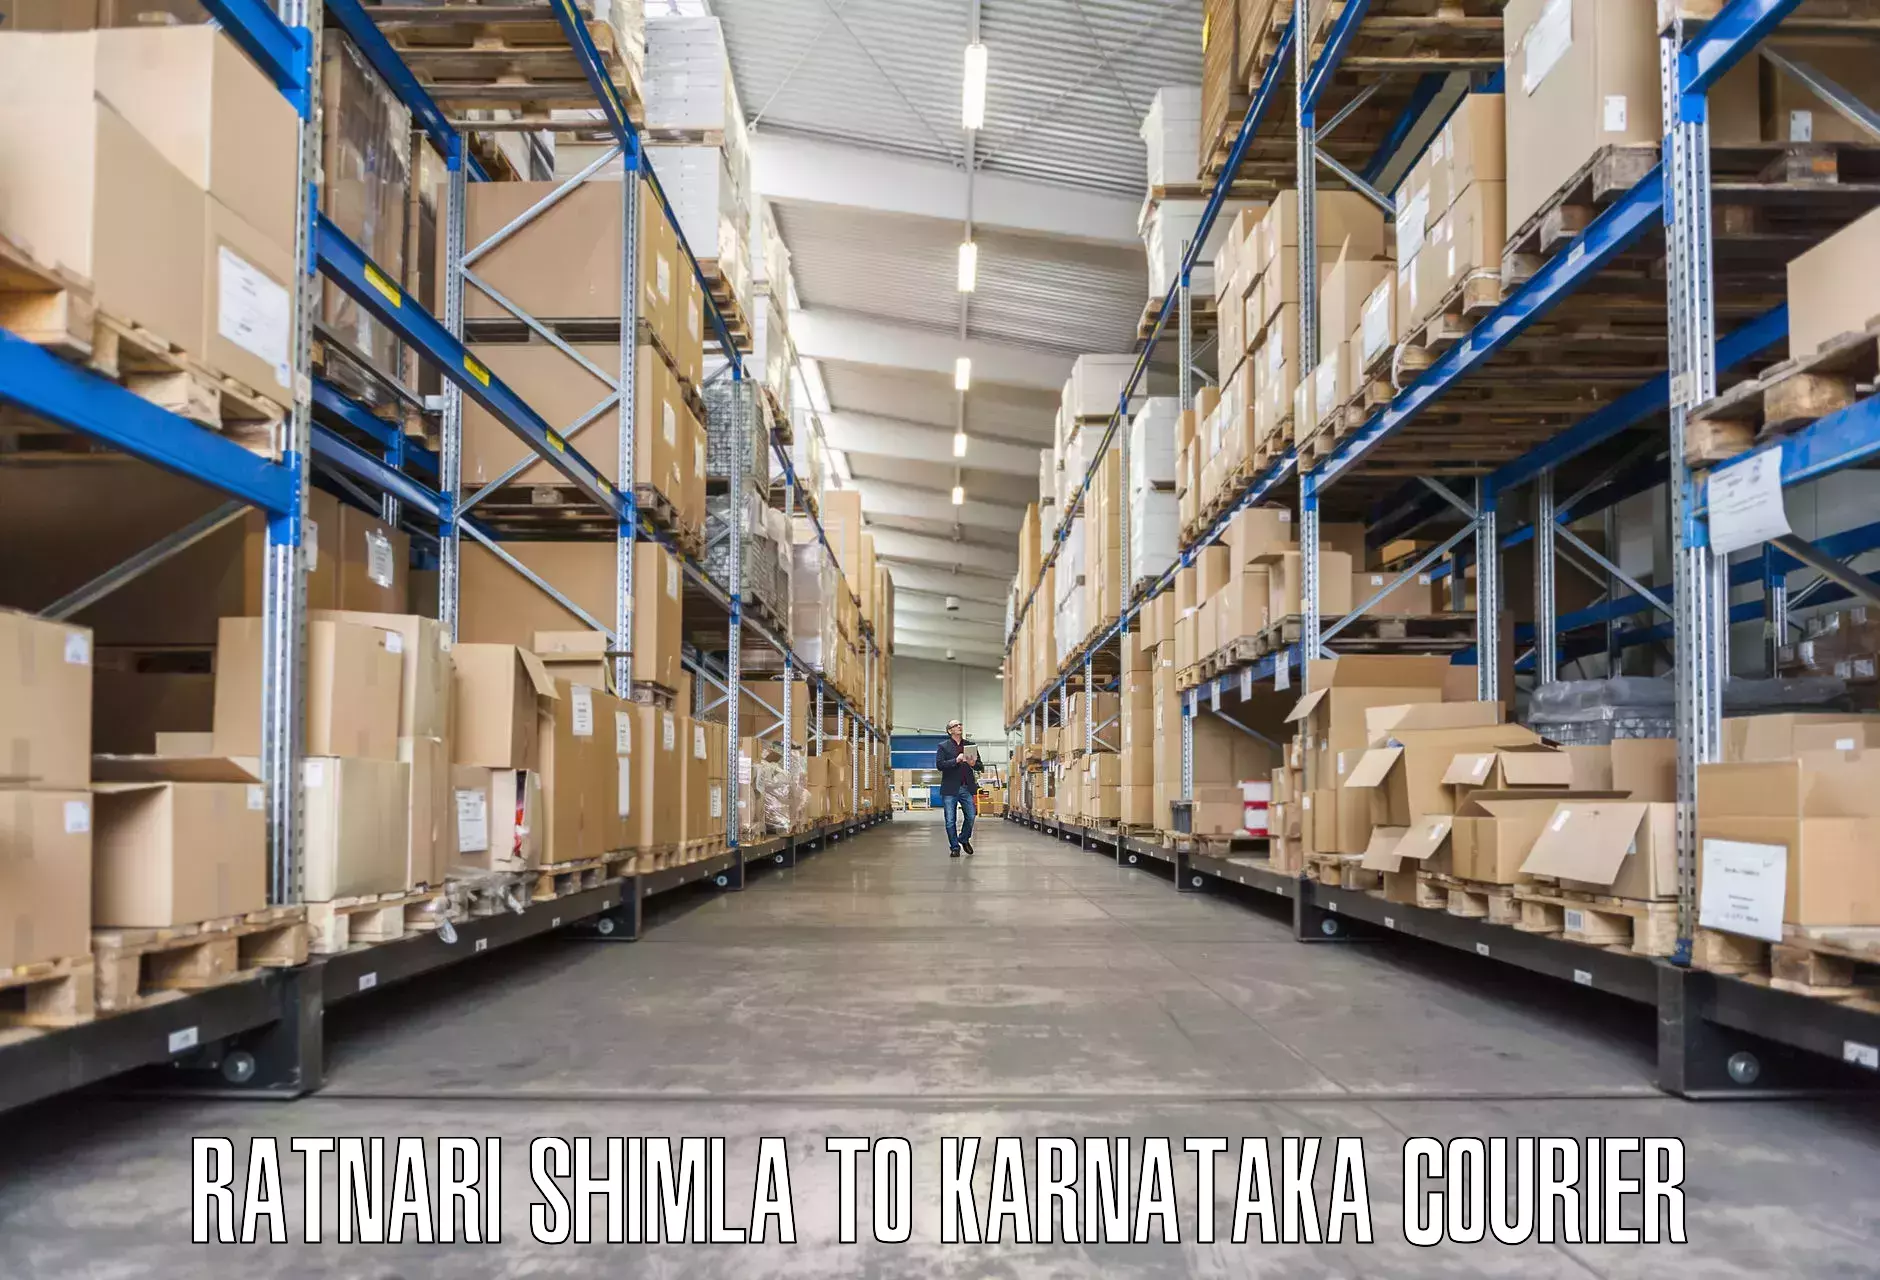 Moving and storage services in Ratnari Shimla to Hagaribommanahalli